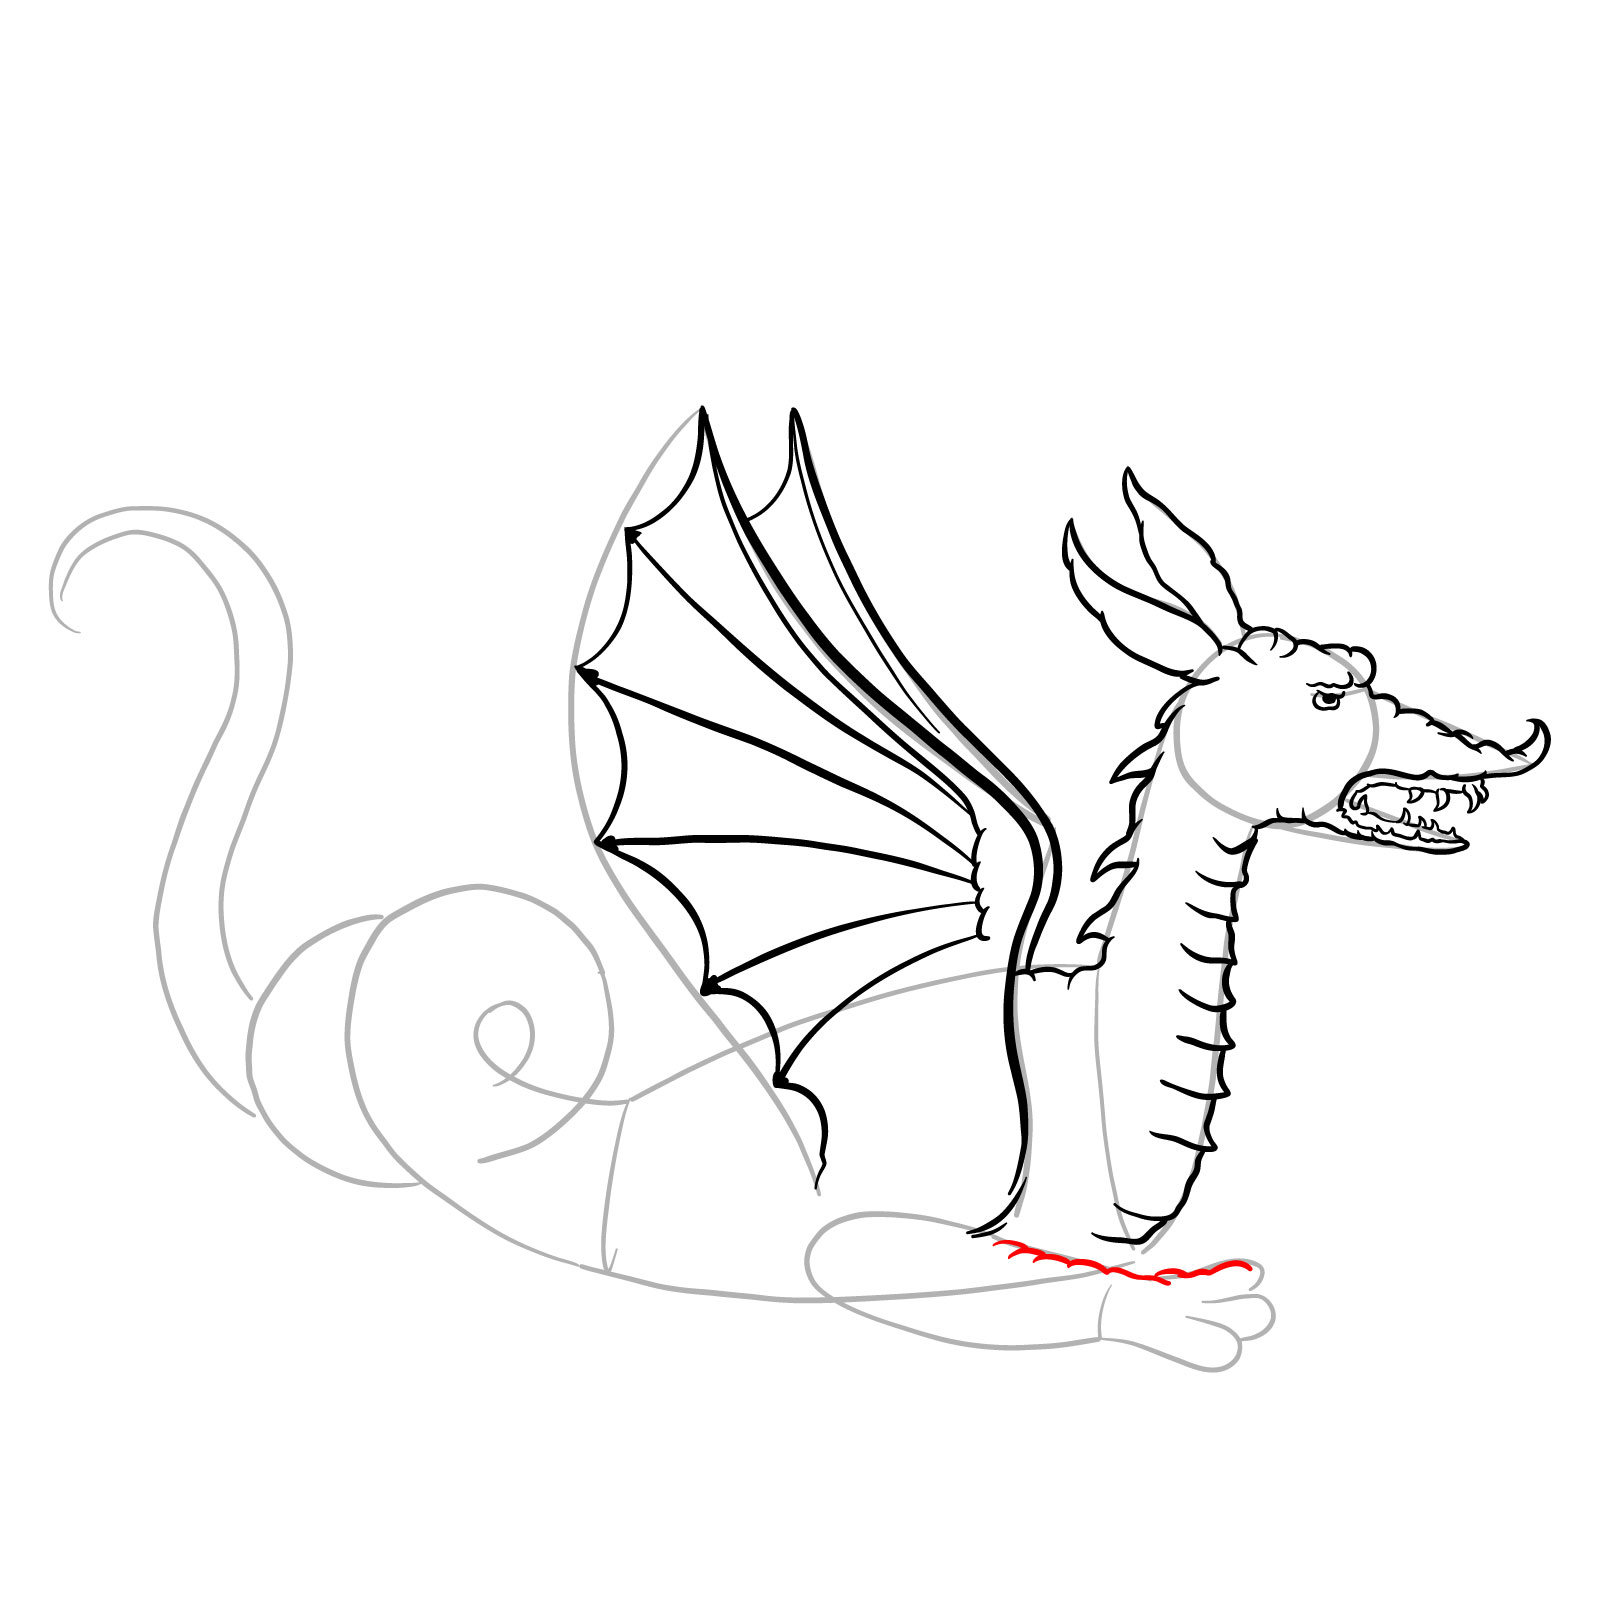 How to draw a Knucker dragon - step 18